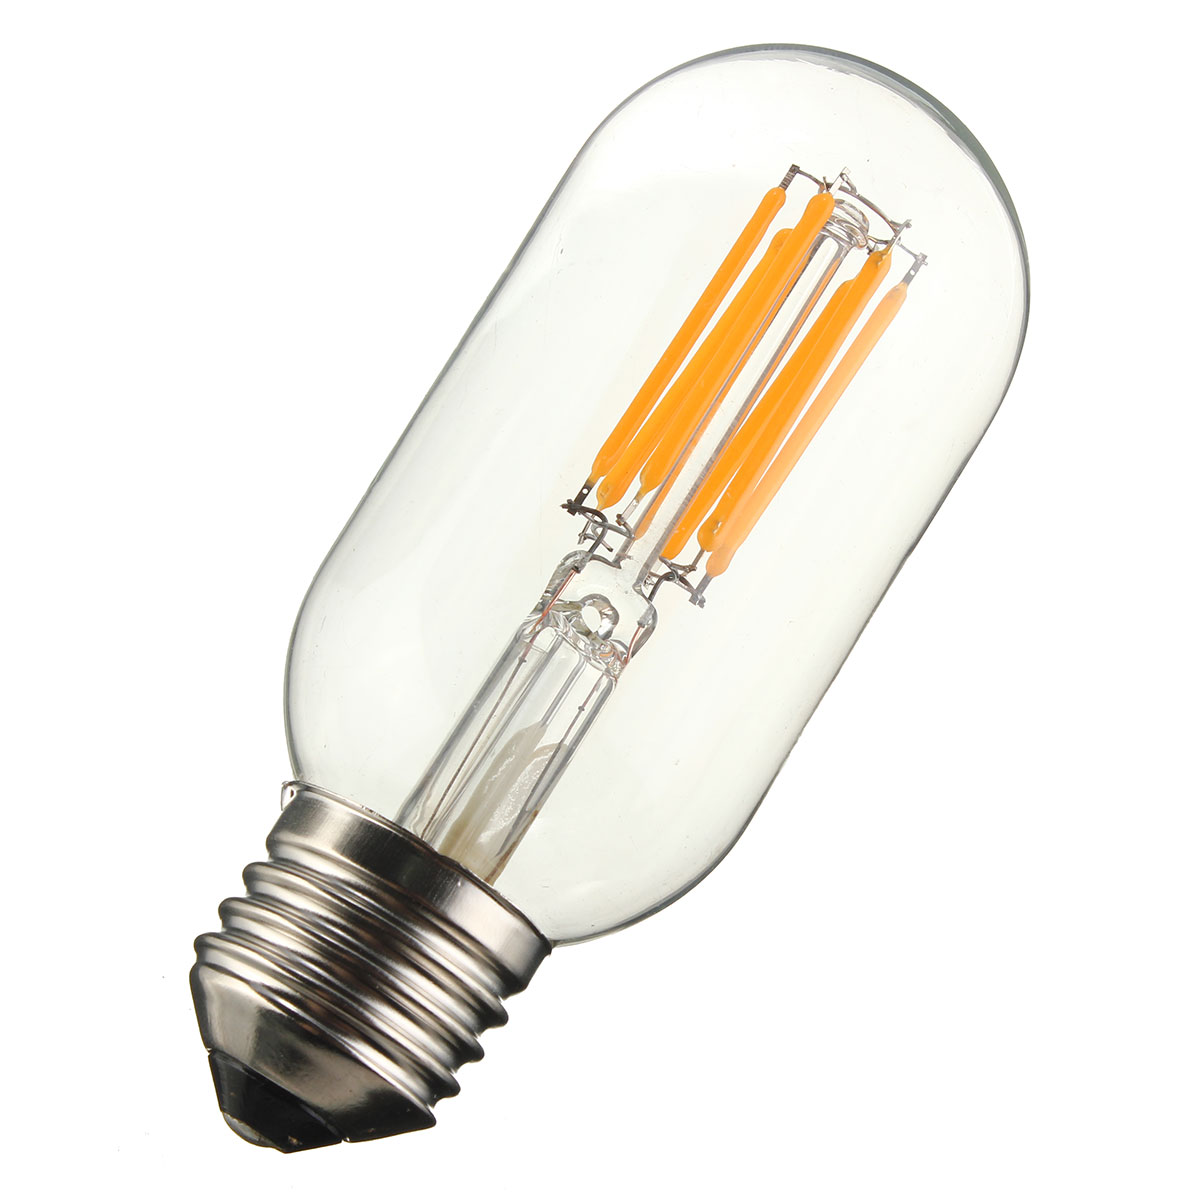 Dimmable-E27-E26-T45-6W-COB-Incandescent-Warm-White-Edsion-Restro-Light-Lamp-Bulb-AC110V-AC220V-1074235